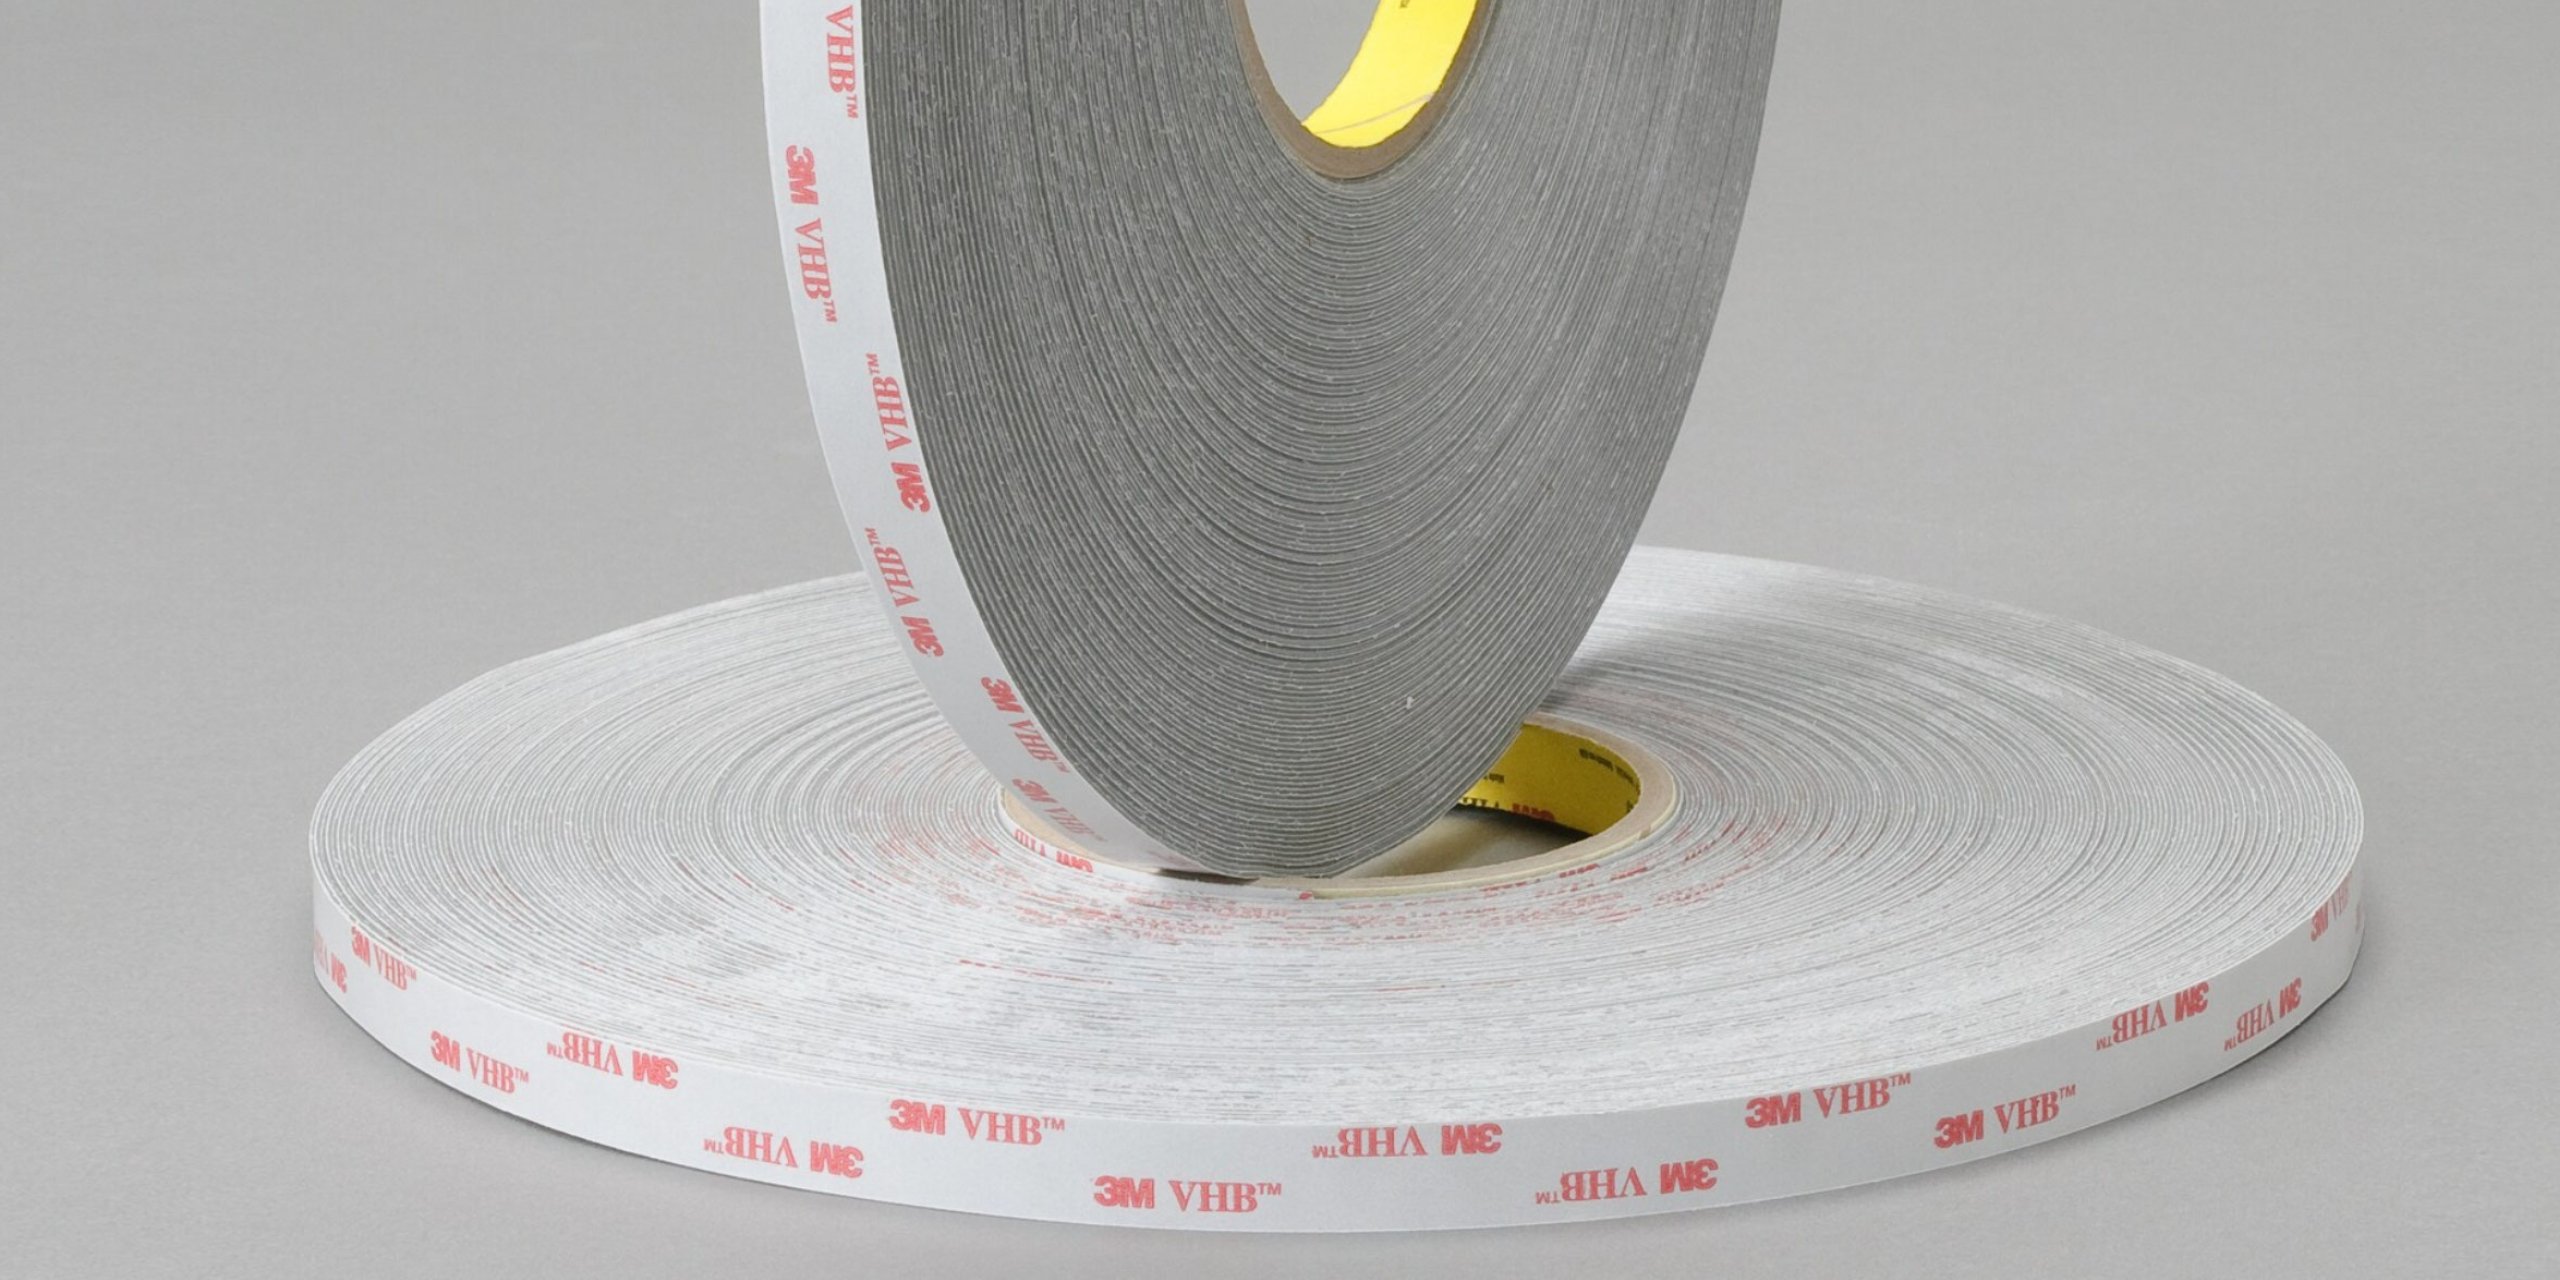  PHIXBEAR Super Strong Adhesive Tape, Made of 3M VHB